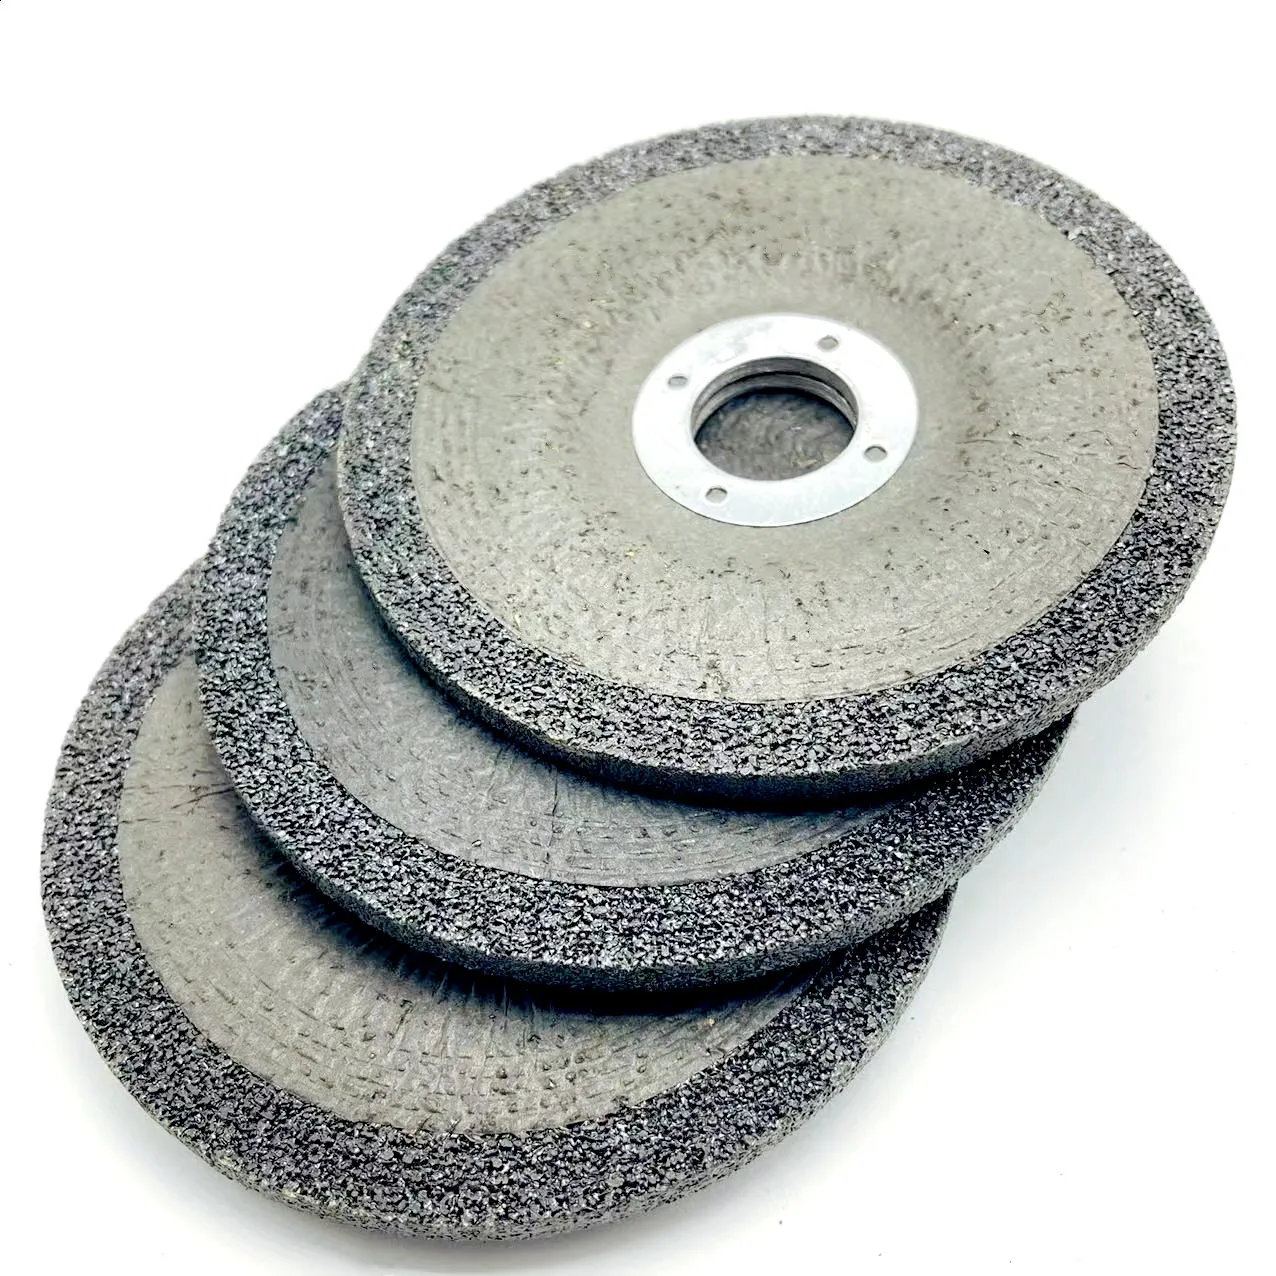 1-10PCS 6mm thick 115mm metal grinding wheel polishing pads stainless steel polishing pads for angle grinder polishing pads